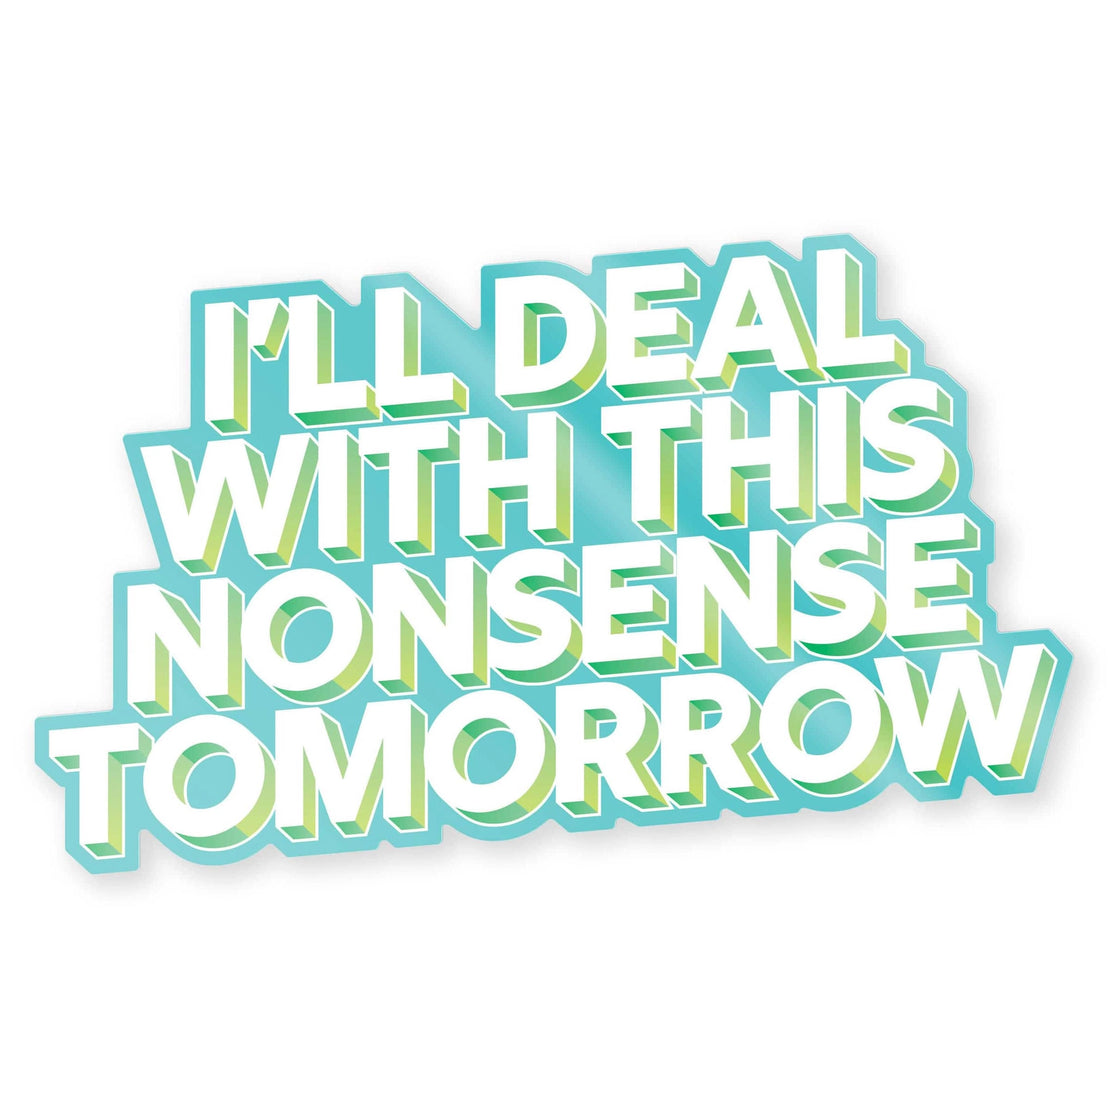 Nonsense Tomorrow Sticker